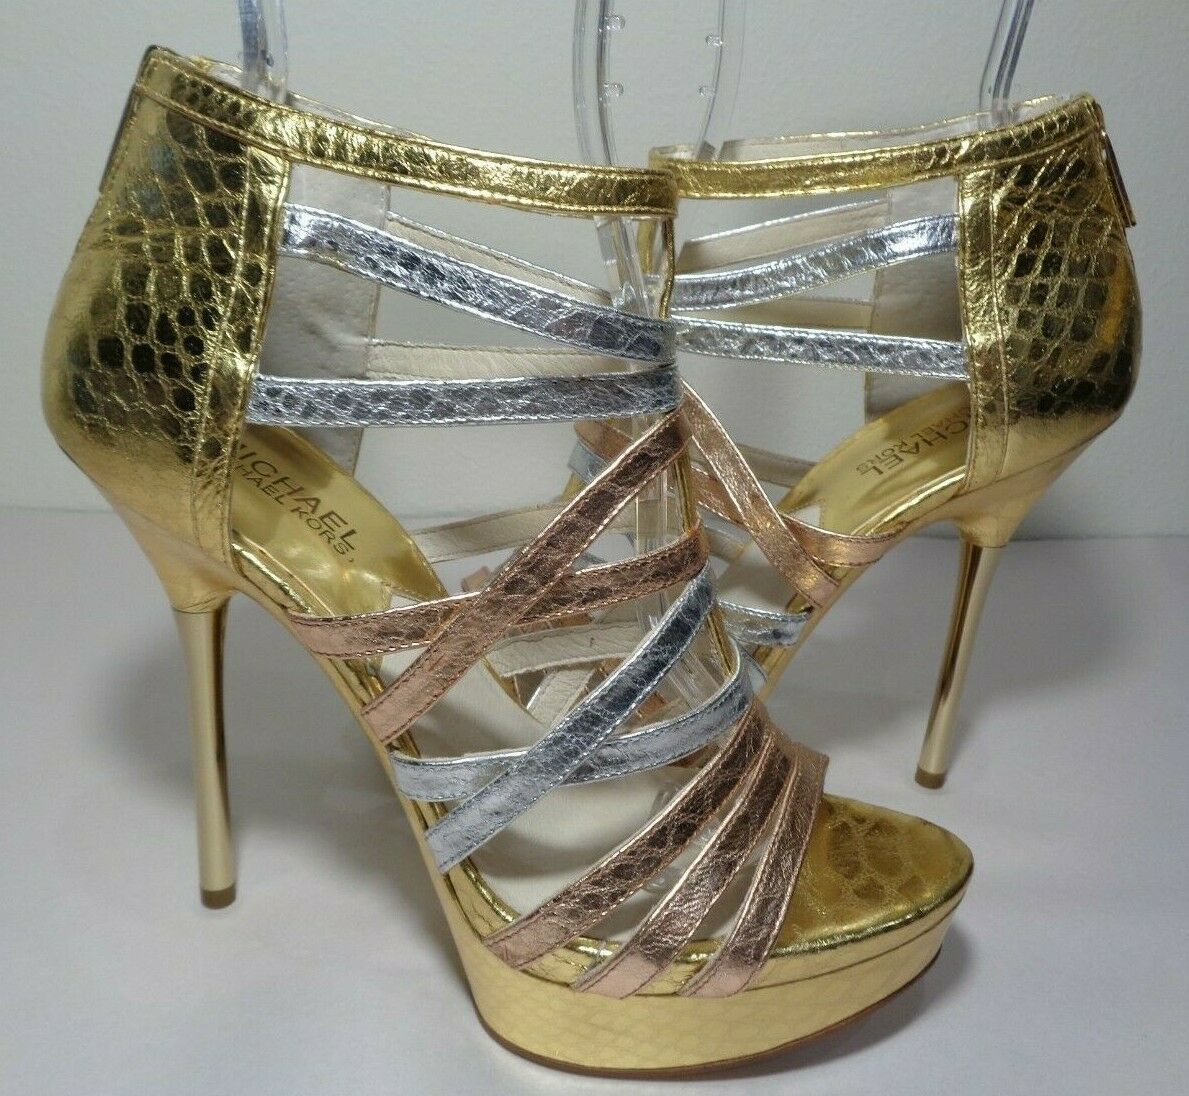 Michael Kors Size 8 M MADDIE PLATFORM Gold Leather Sandals New Women's Shoes